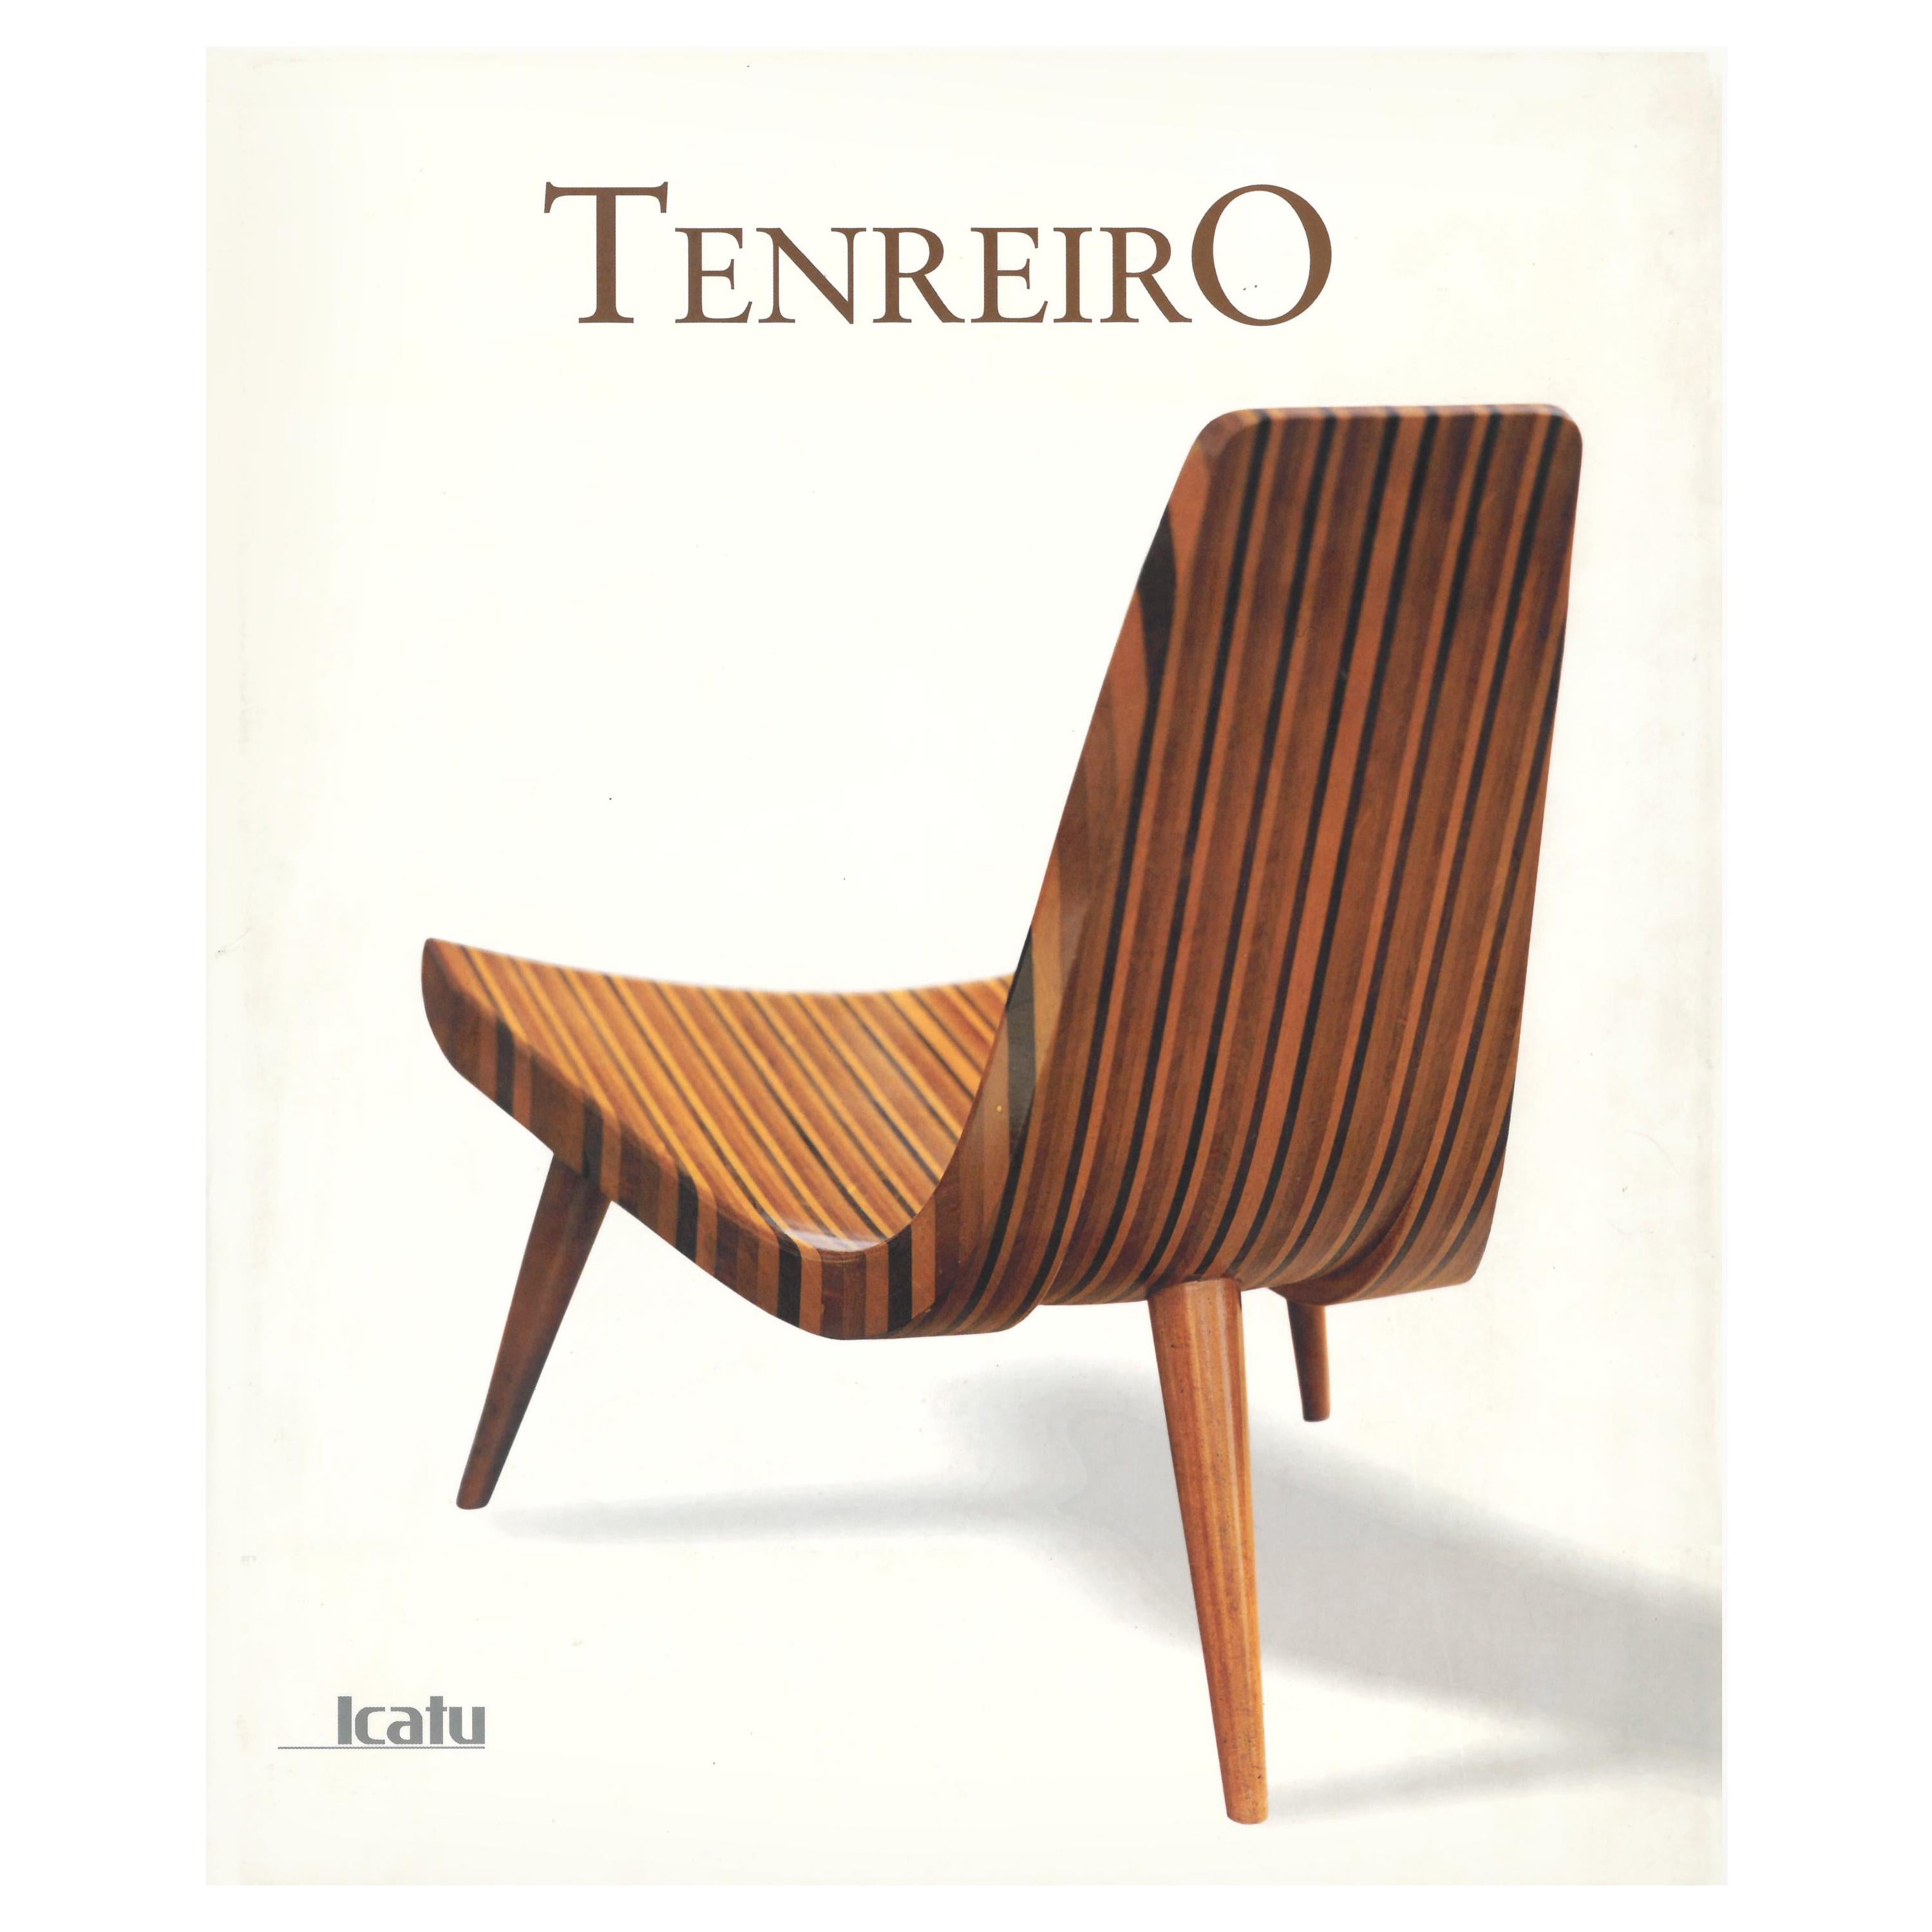 Tenreiro 'Book' For Sale at 1stDibs